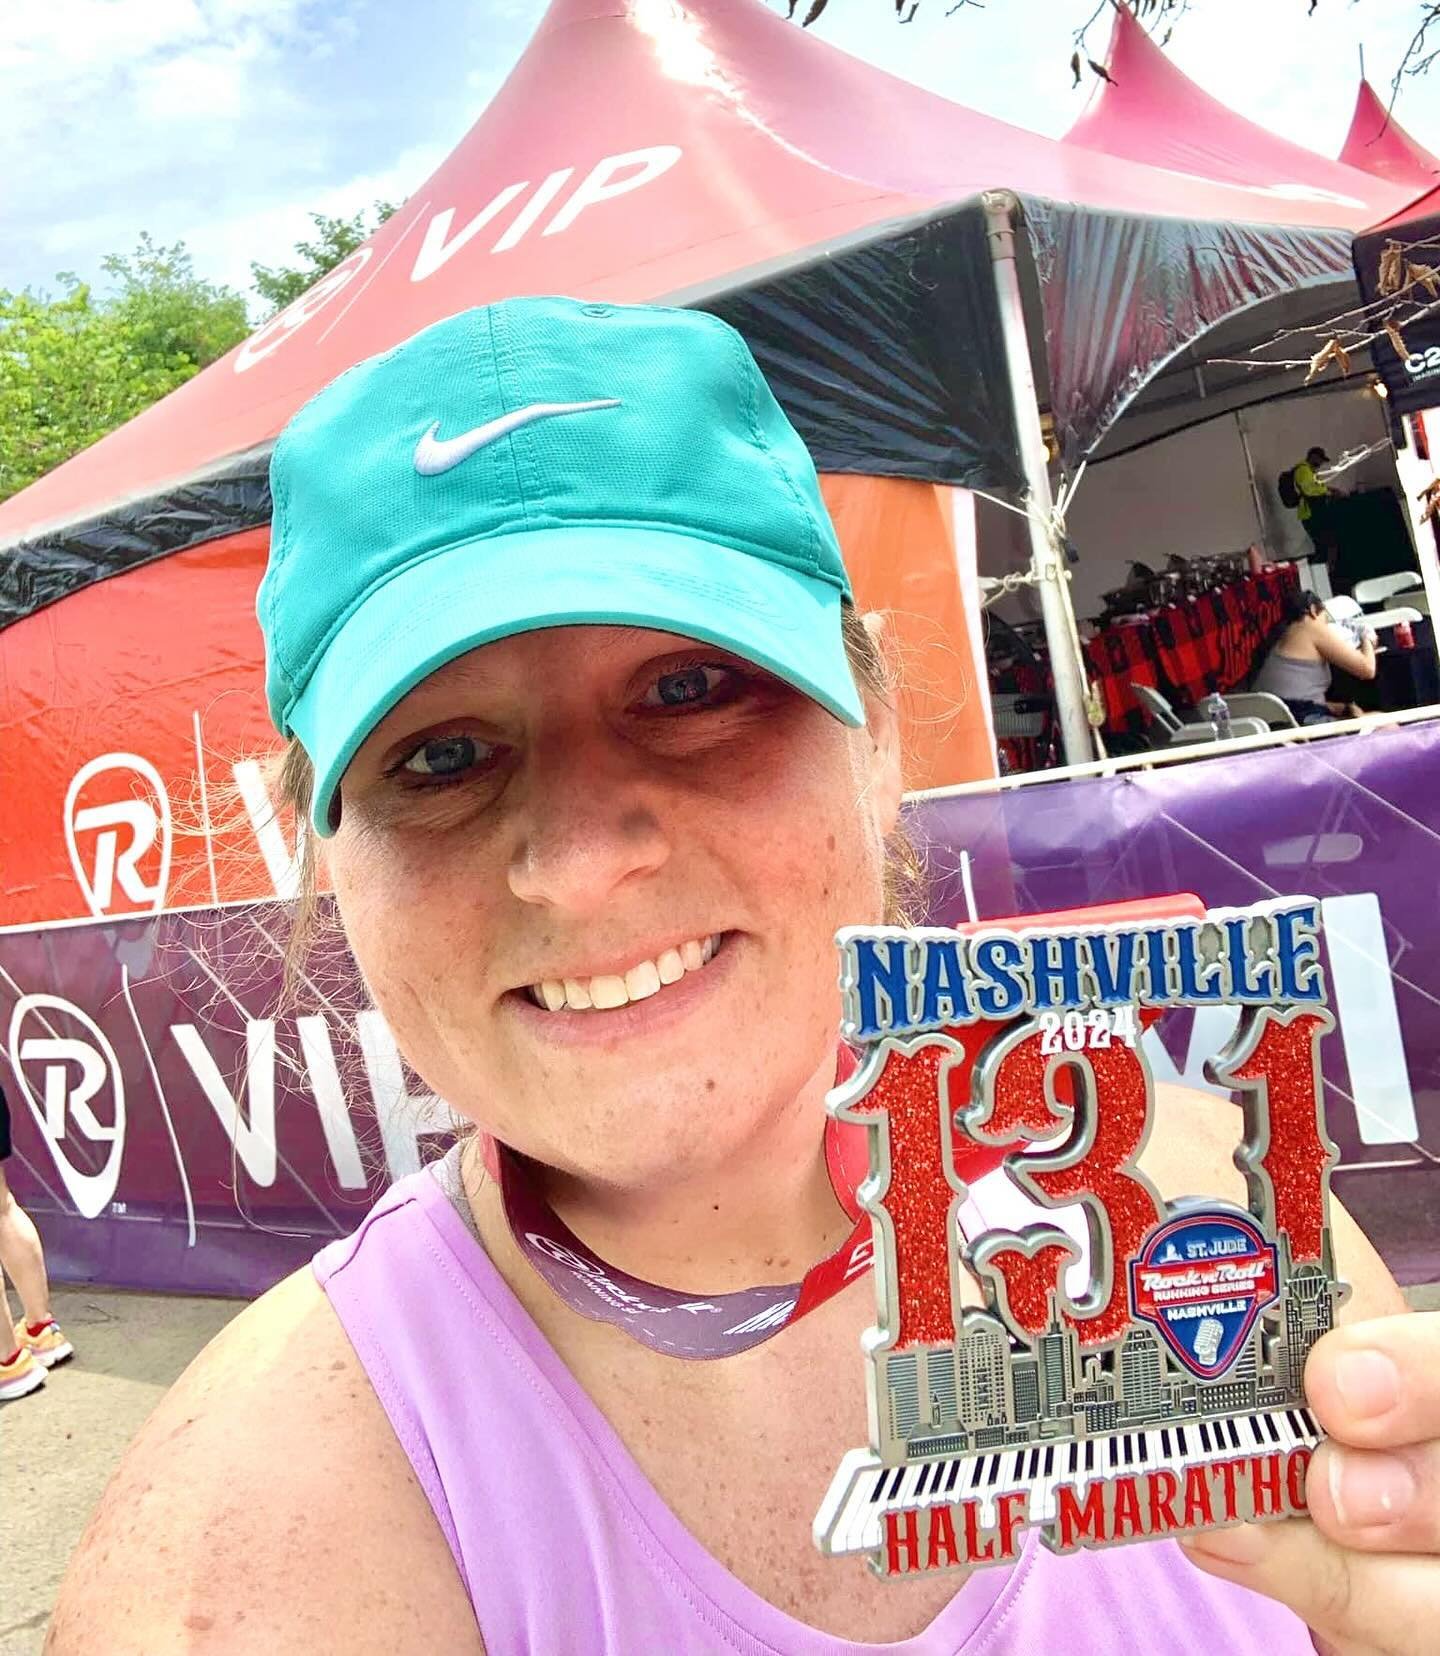 Great racing at the Nashville Rock n Roll Half Marathon! Congrats Becky Kaste for taking on those Nashville hills! 💪🙌👊

#cantstopendurance #running #run901 #dallasrunner
 #rundallas #texasrunner #memphisrunner 
#runsmart #runner #runninglife #uesc